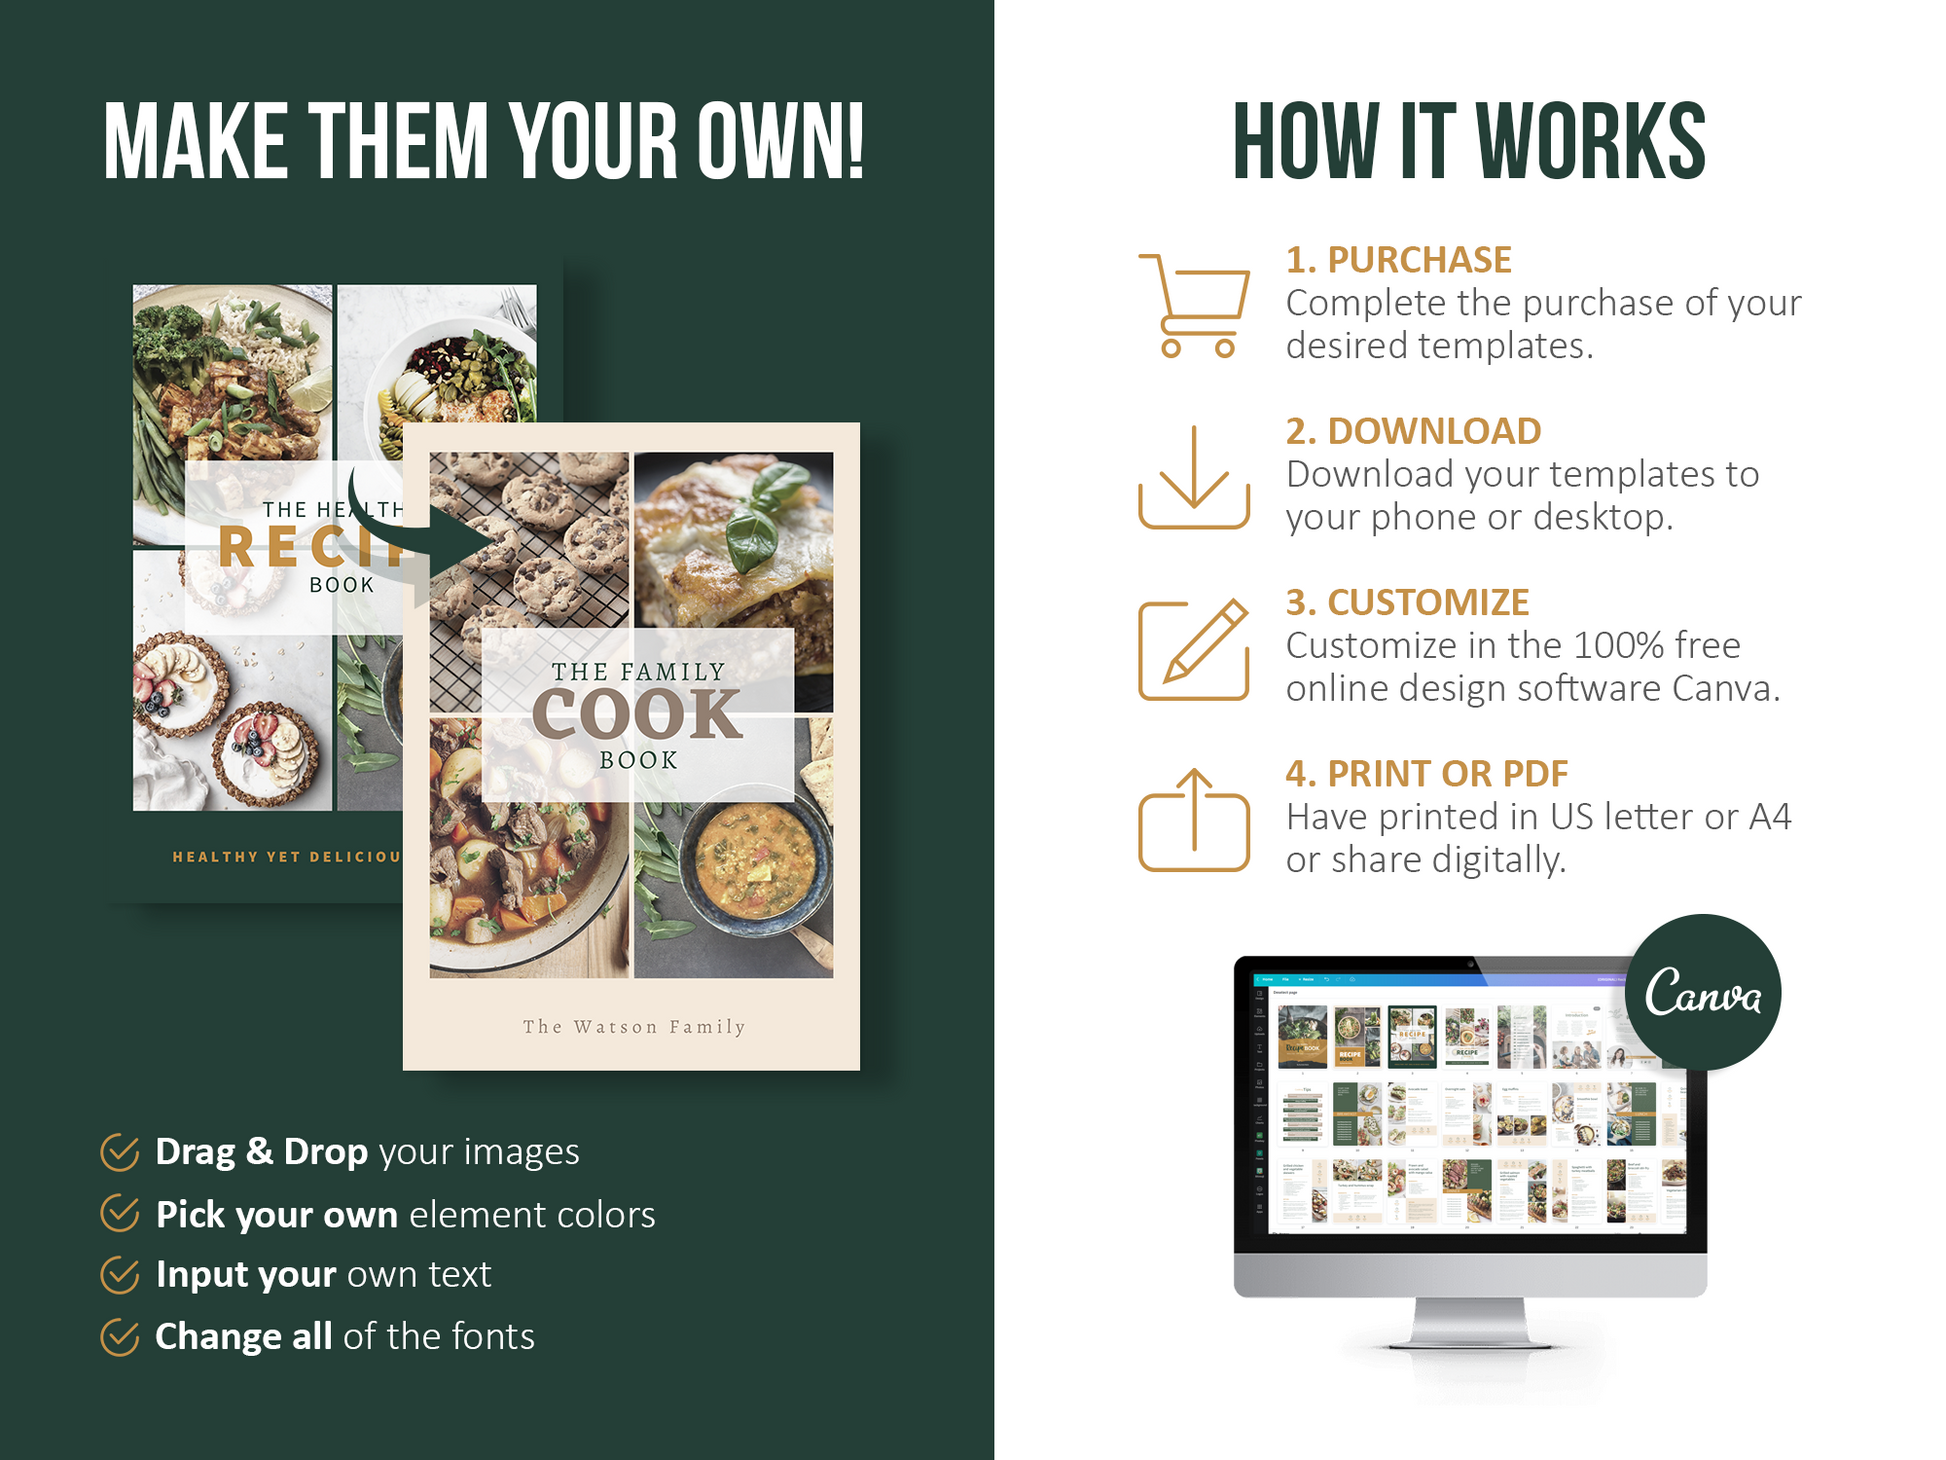 COOKBOOK Template Family Cookbook Recipe Book Template Recipe